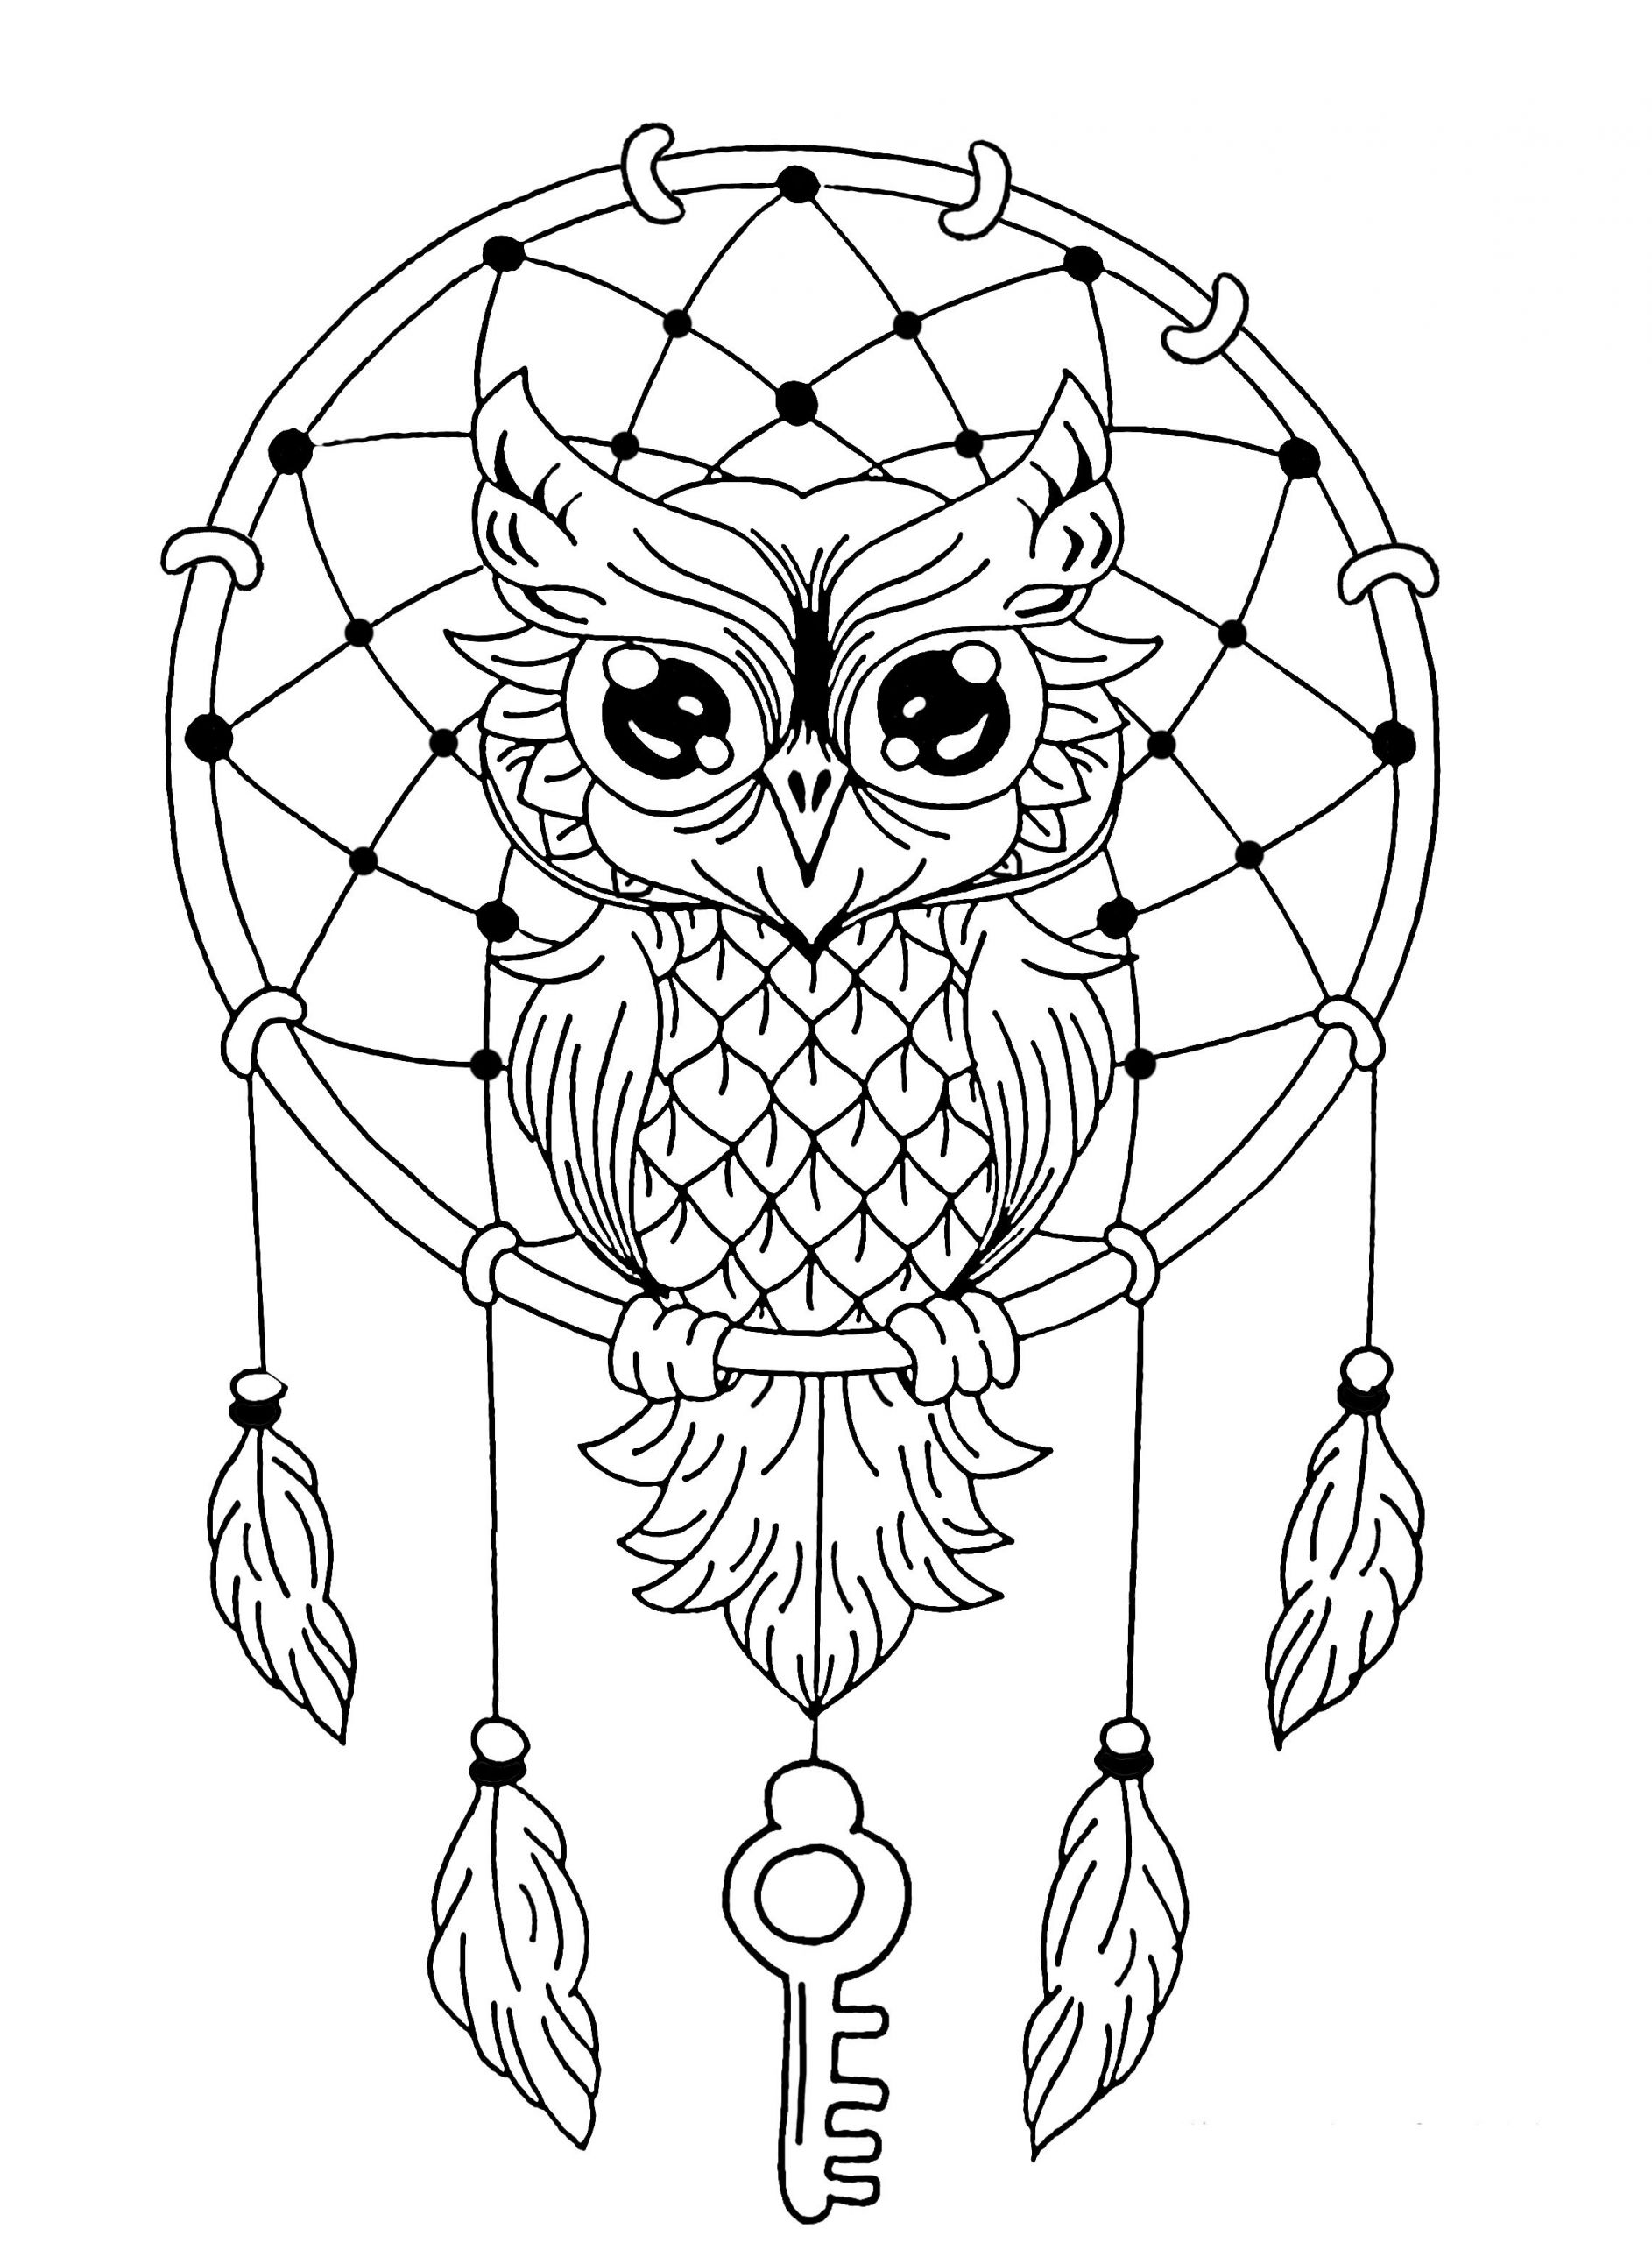 Printable Adult Coloring Pages Dream Catchers
 Owl dreamcatcher